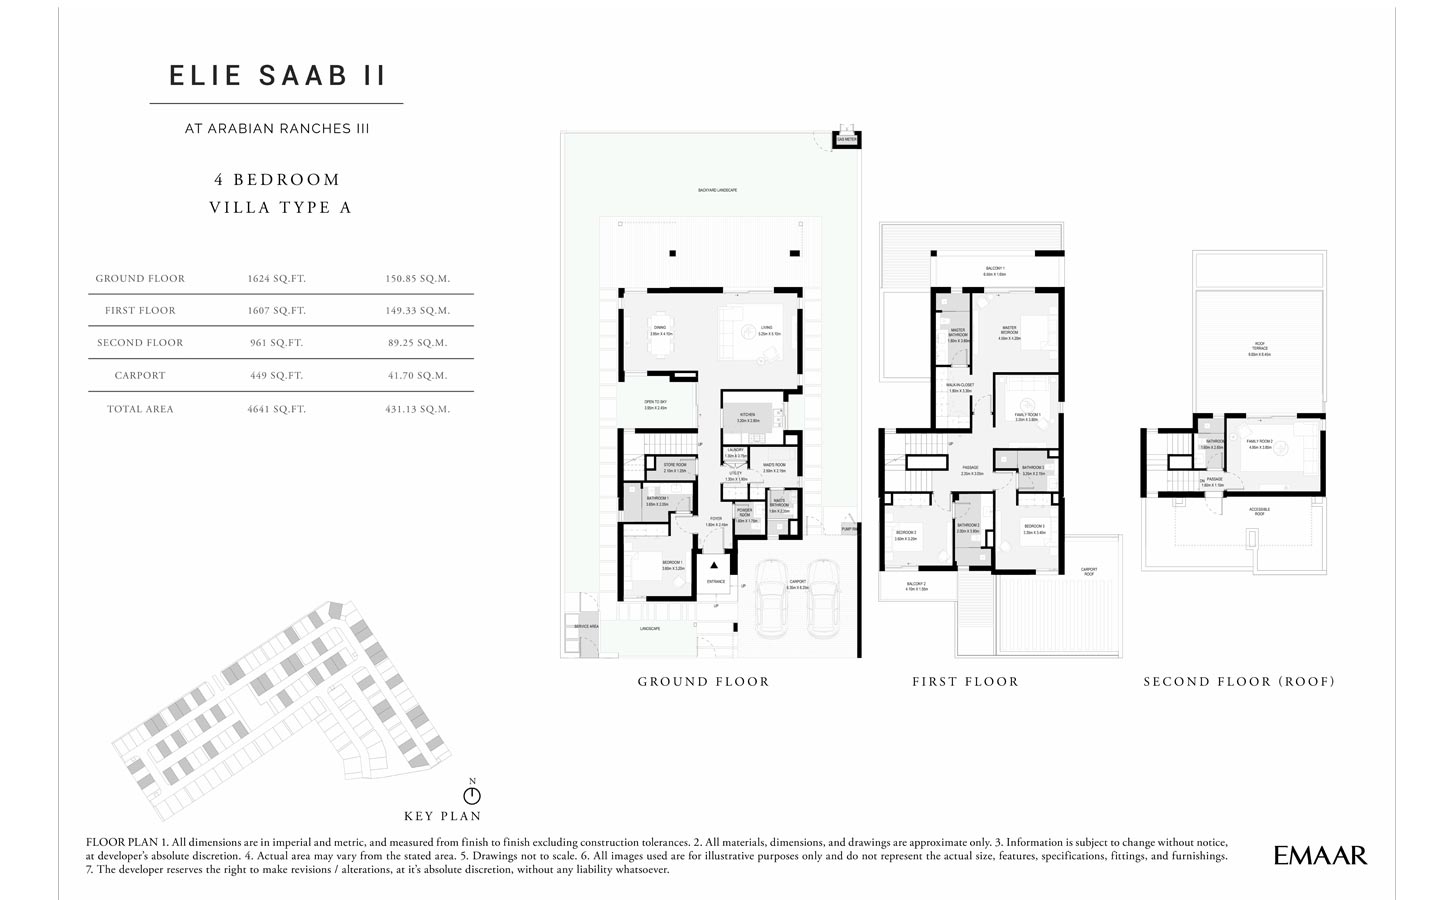 4 Bedroom Villa Type A Elie Saab 2 Floor Plan